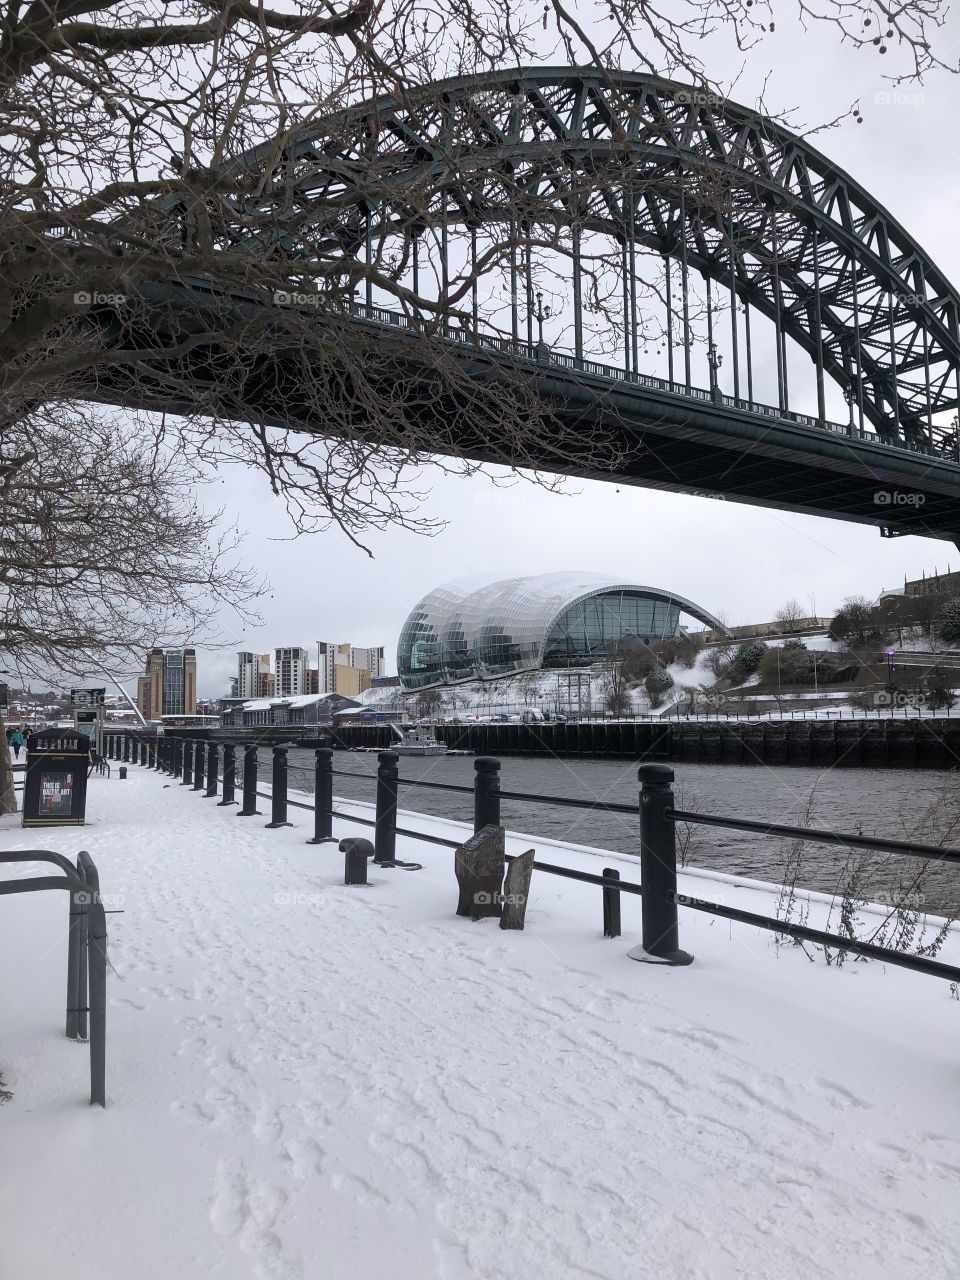 Winter snowy days on newcastlegateshead quayside including the iconic tune bridge 